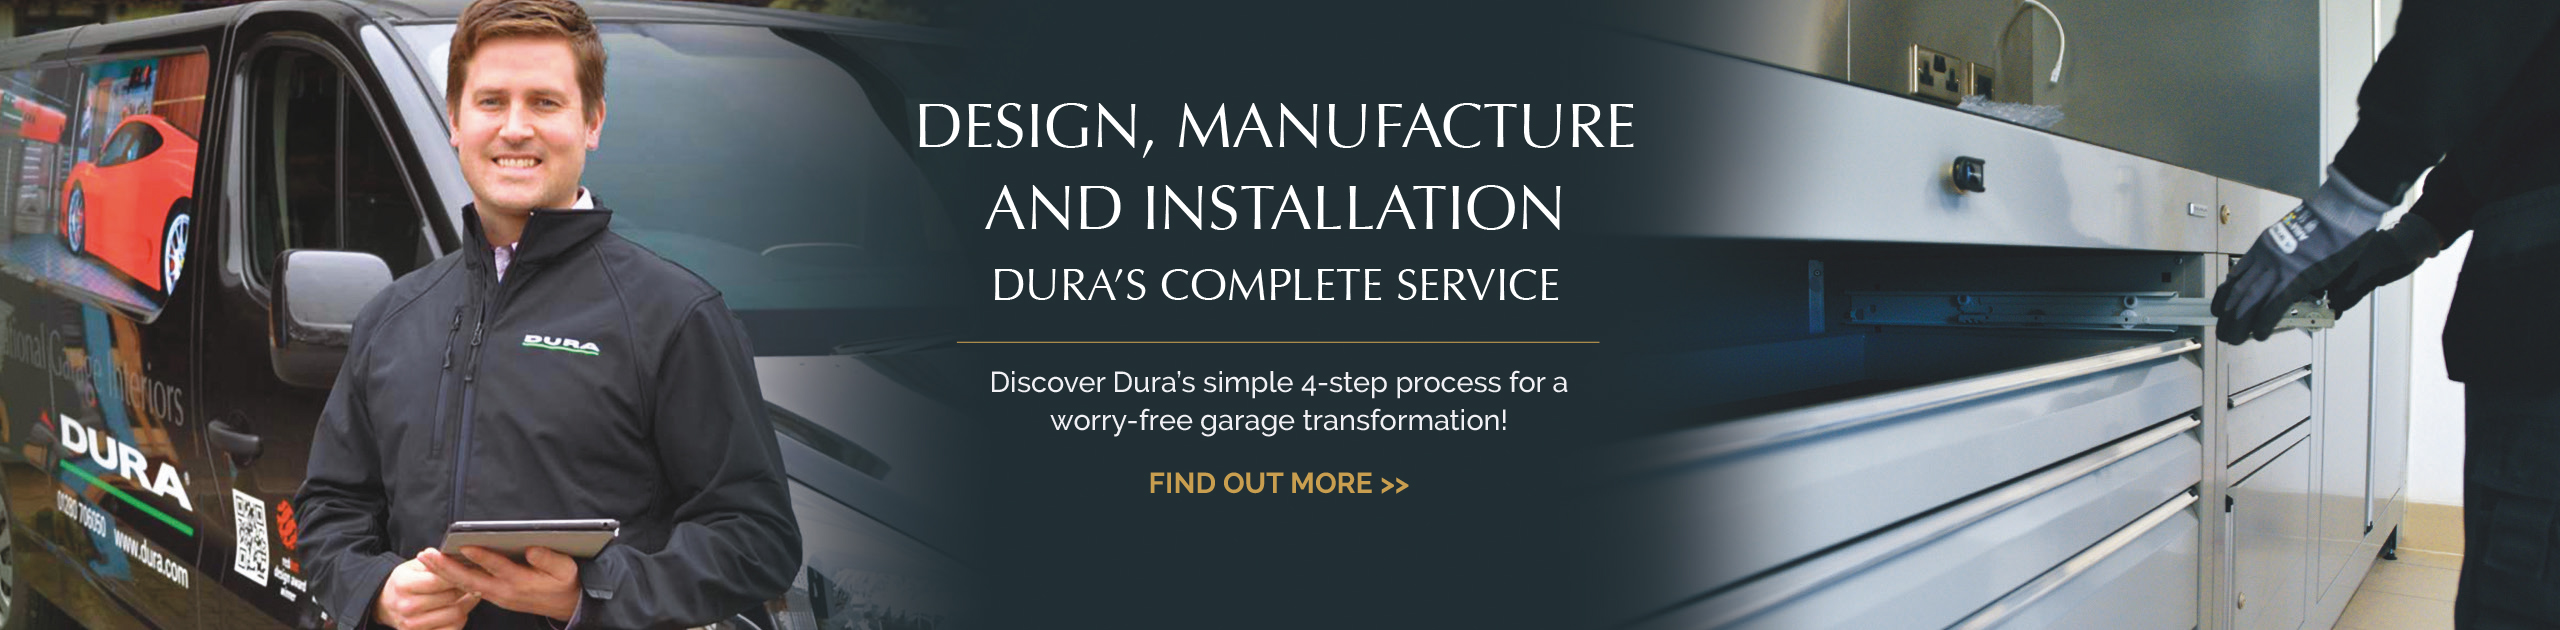 Design, manufacture and installation Dura's complete service